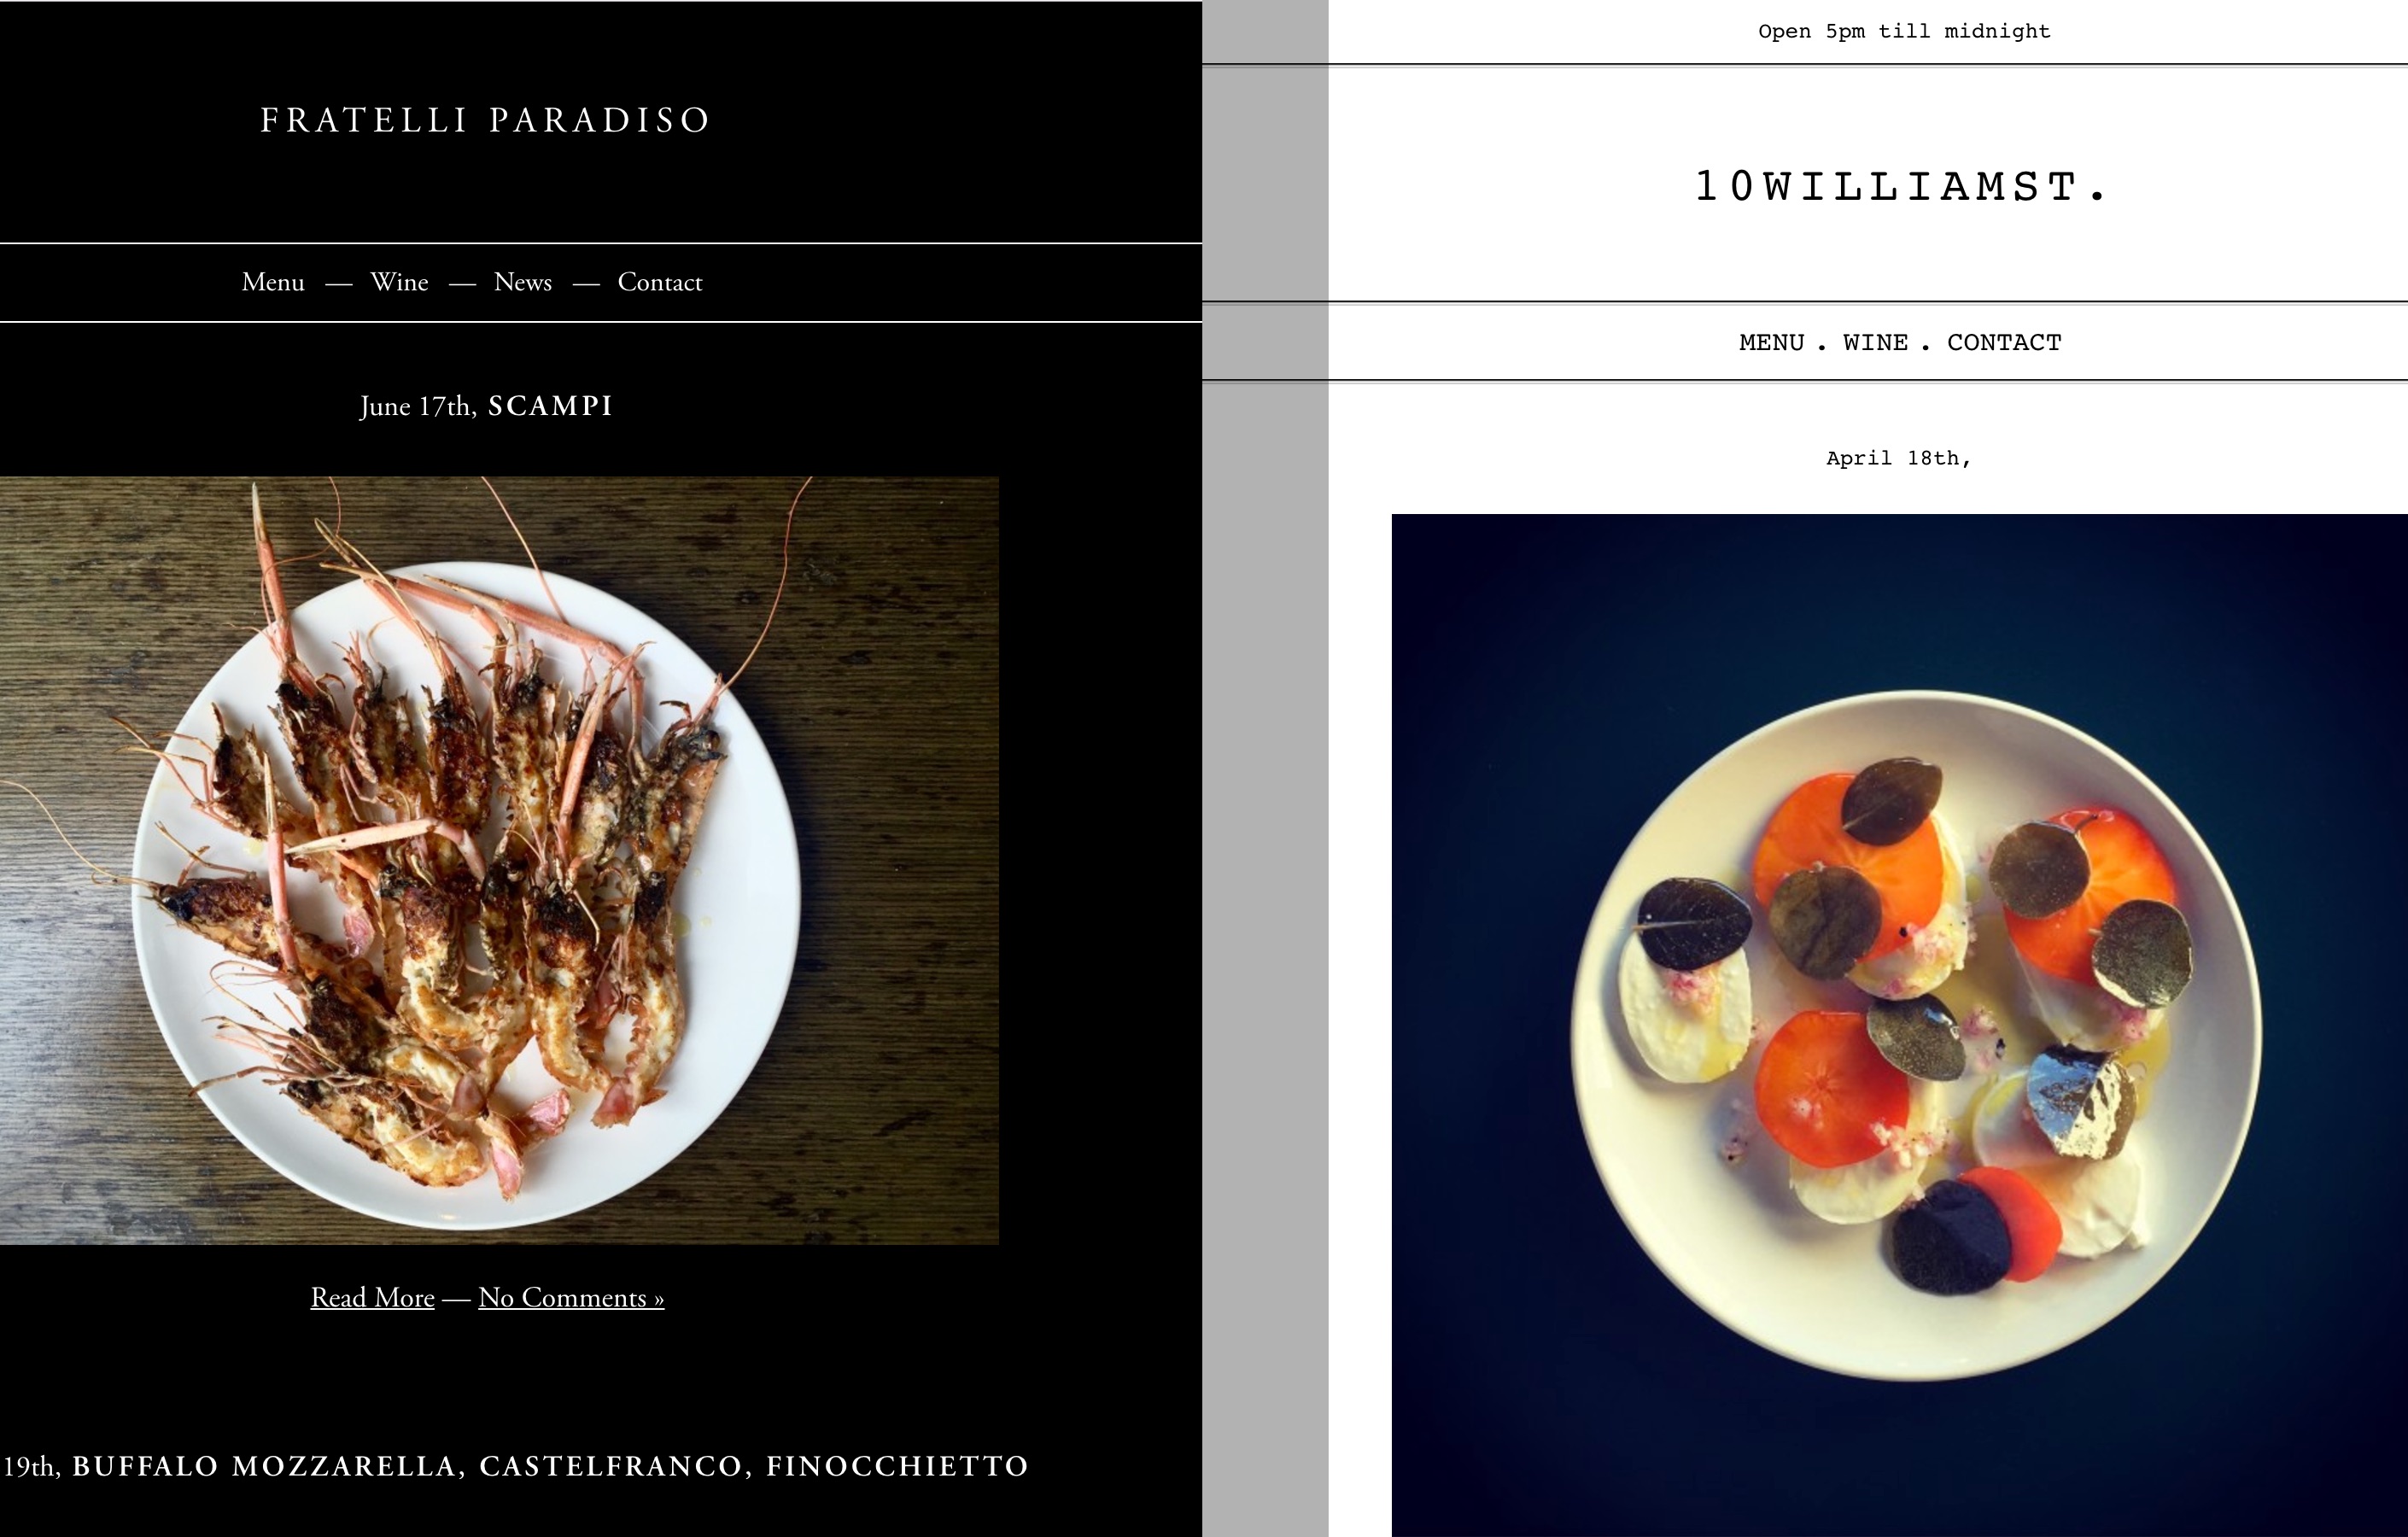 Fratelli Paradiso and 10 William St Restaurant website design and development